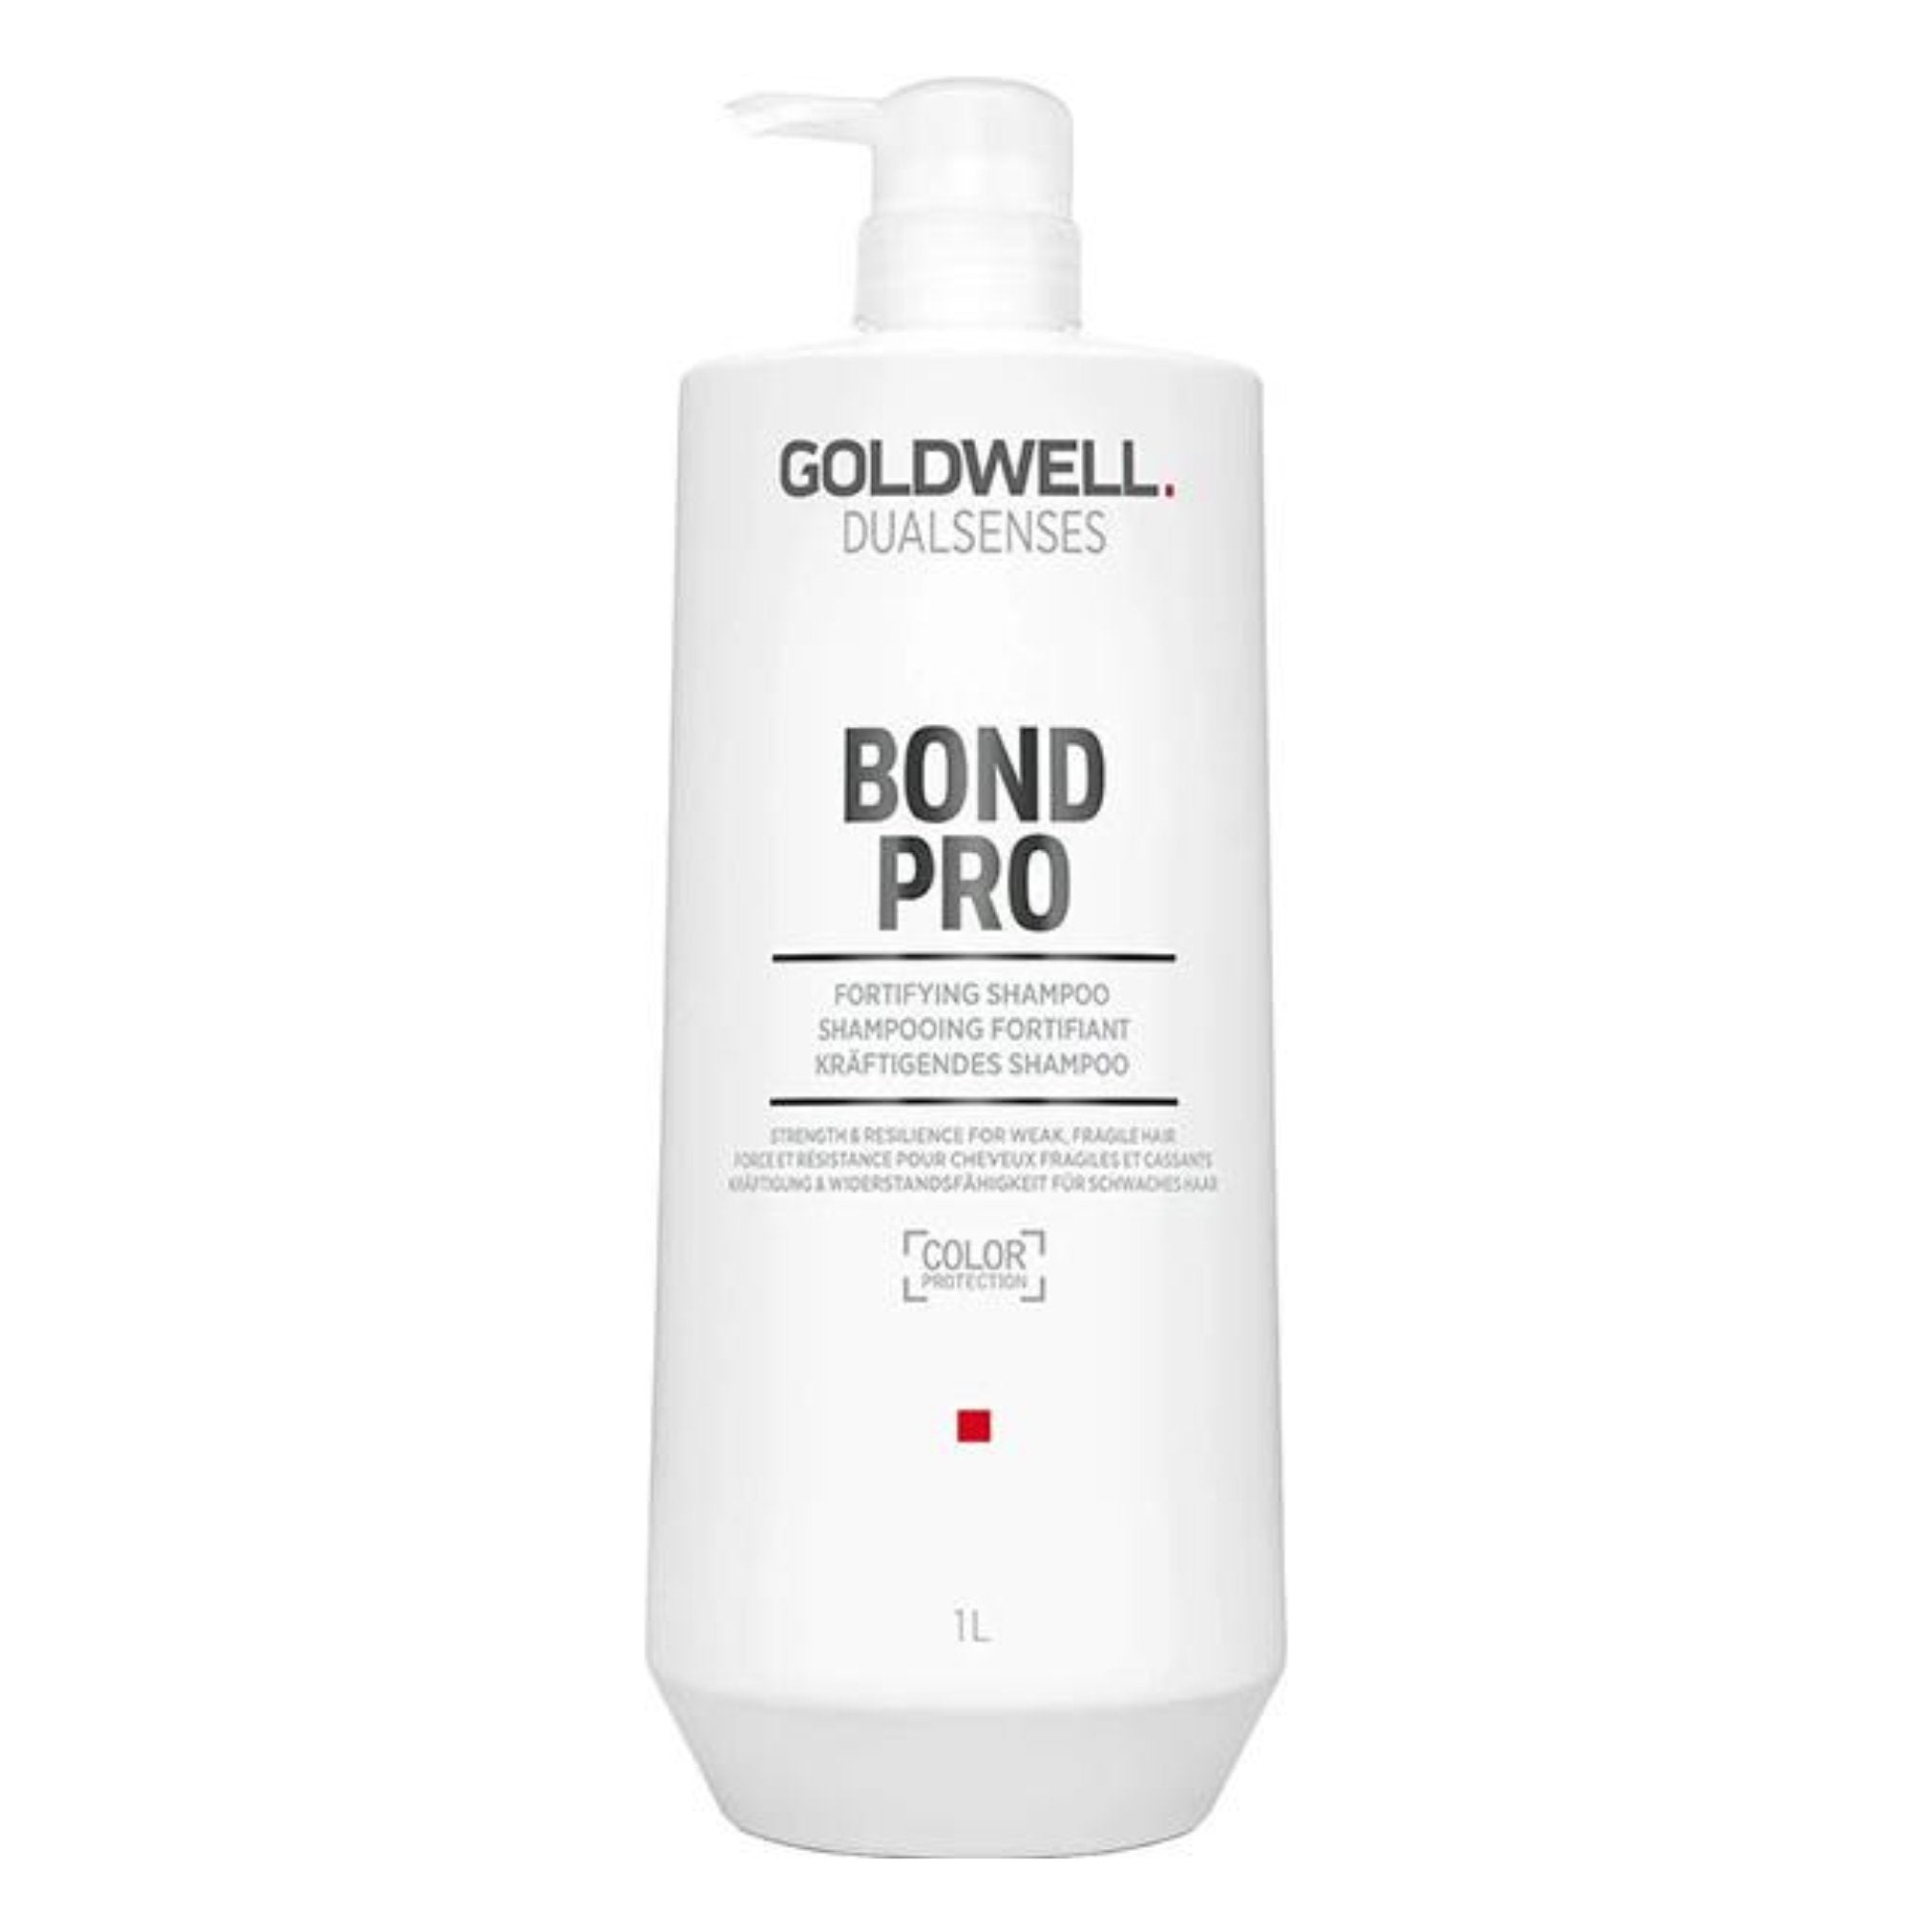 Goldwell. Dual Senses Bond Pro Shampoing Fortifiant - 1000 ml - Concept C. Shop